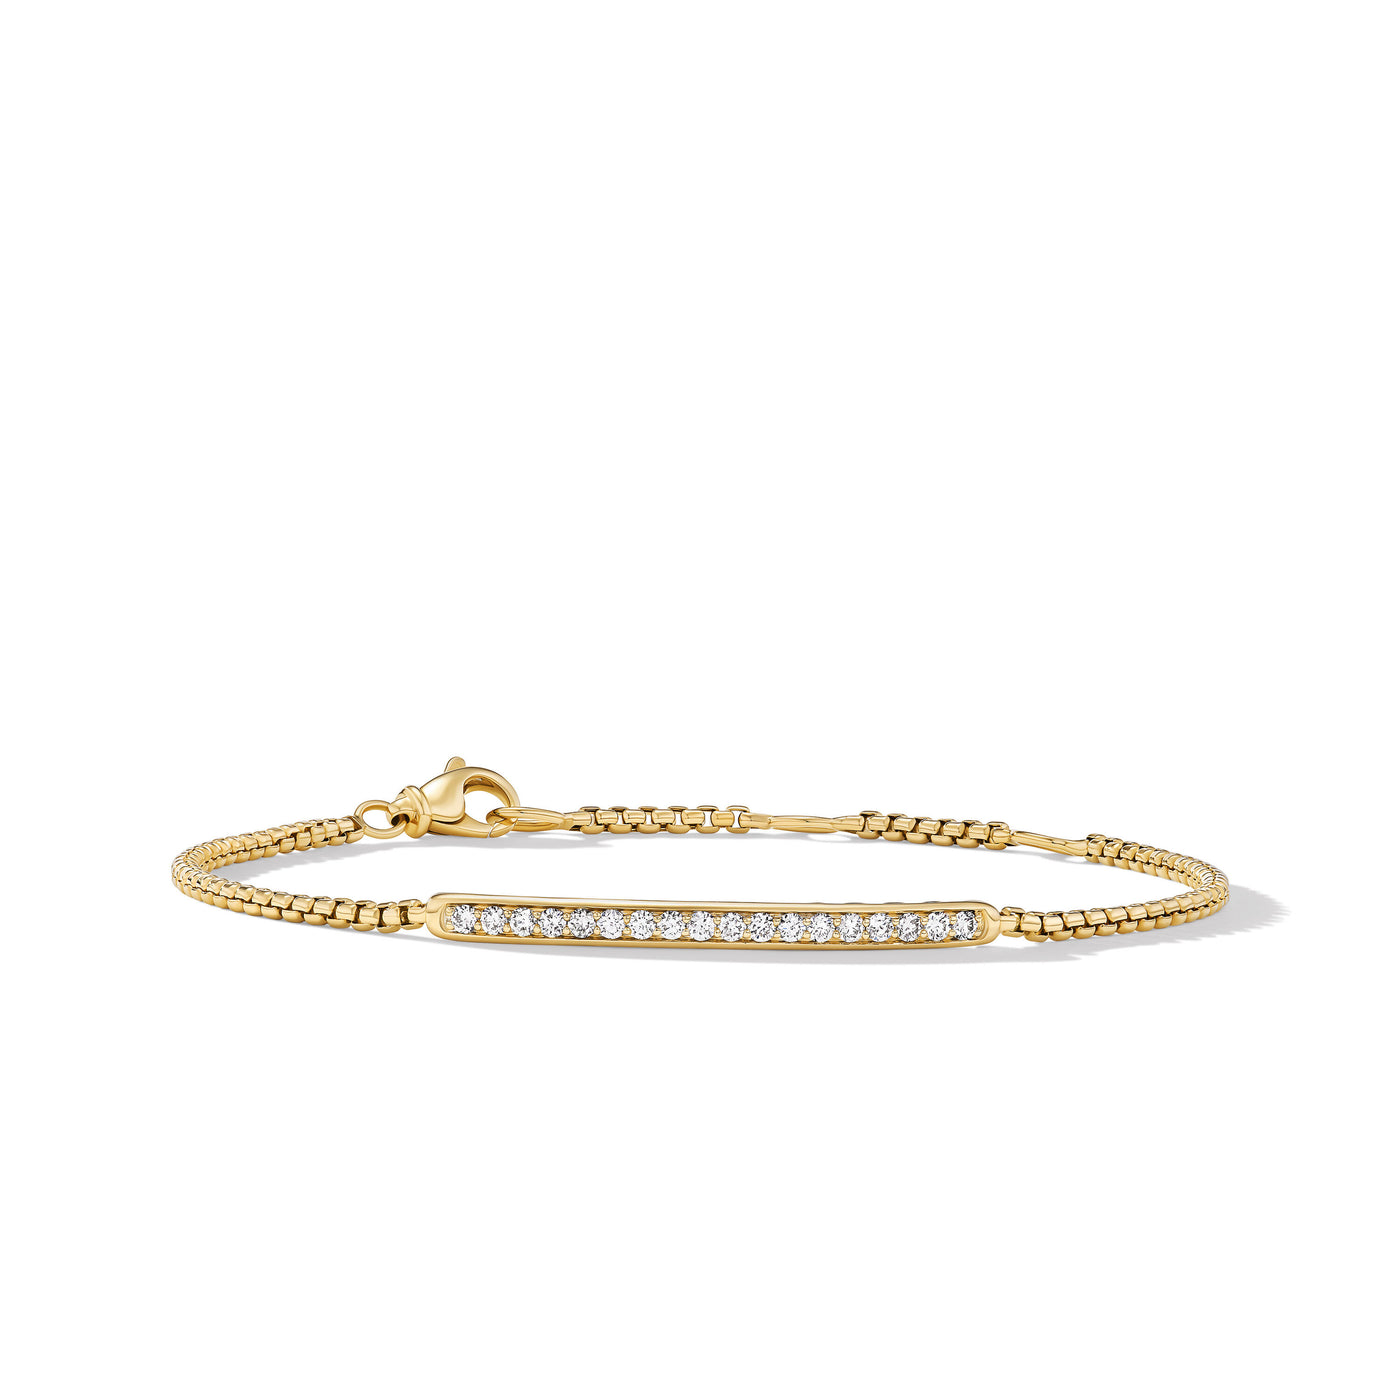 Petite Pavé Bar Bracelet in 18K Yellow Gold with Diamonds\, 1.7mm